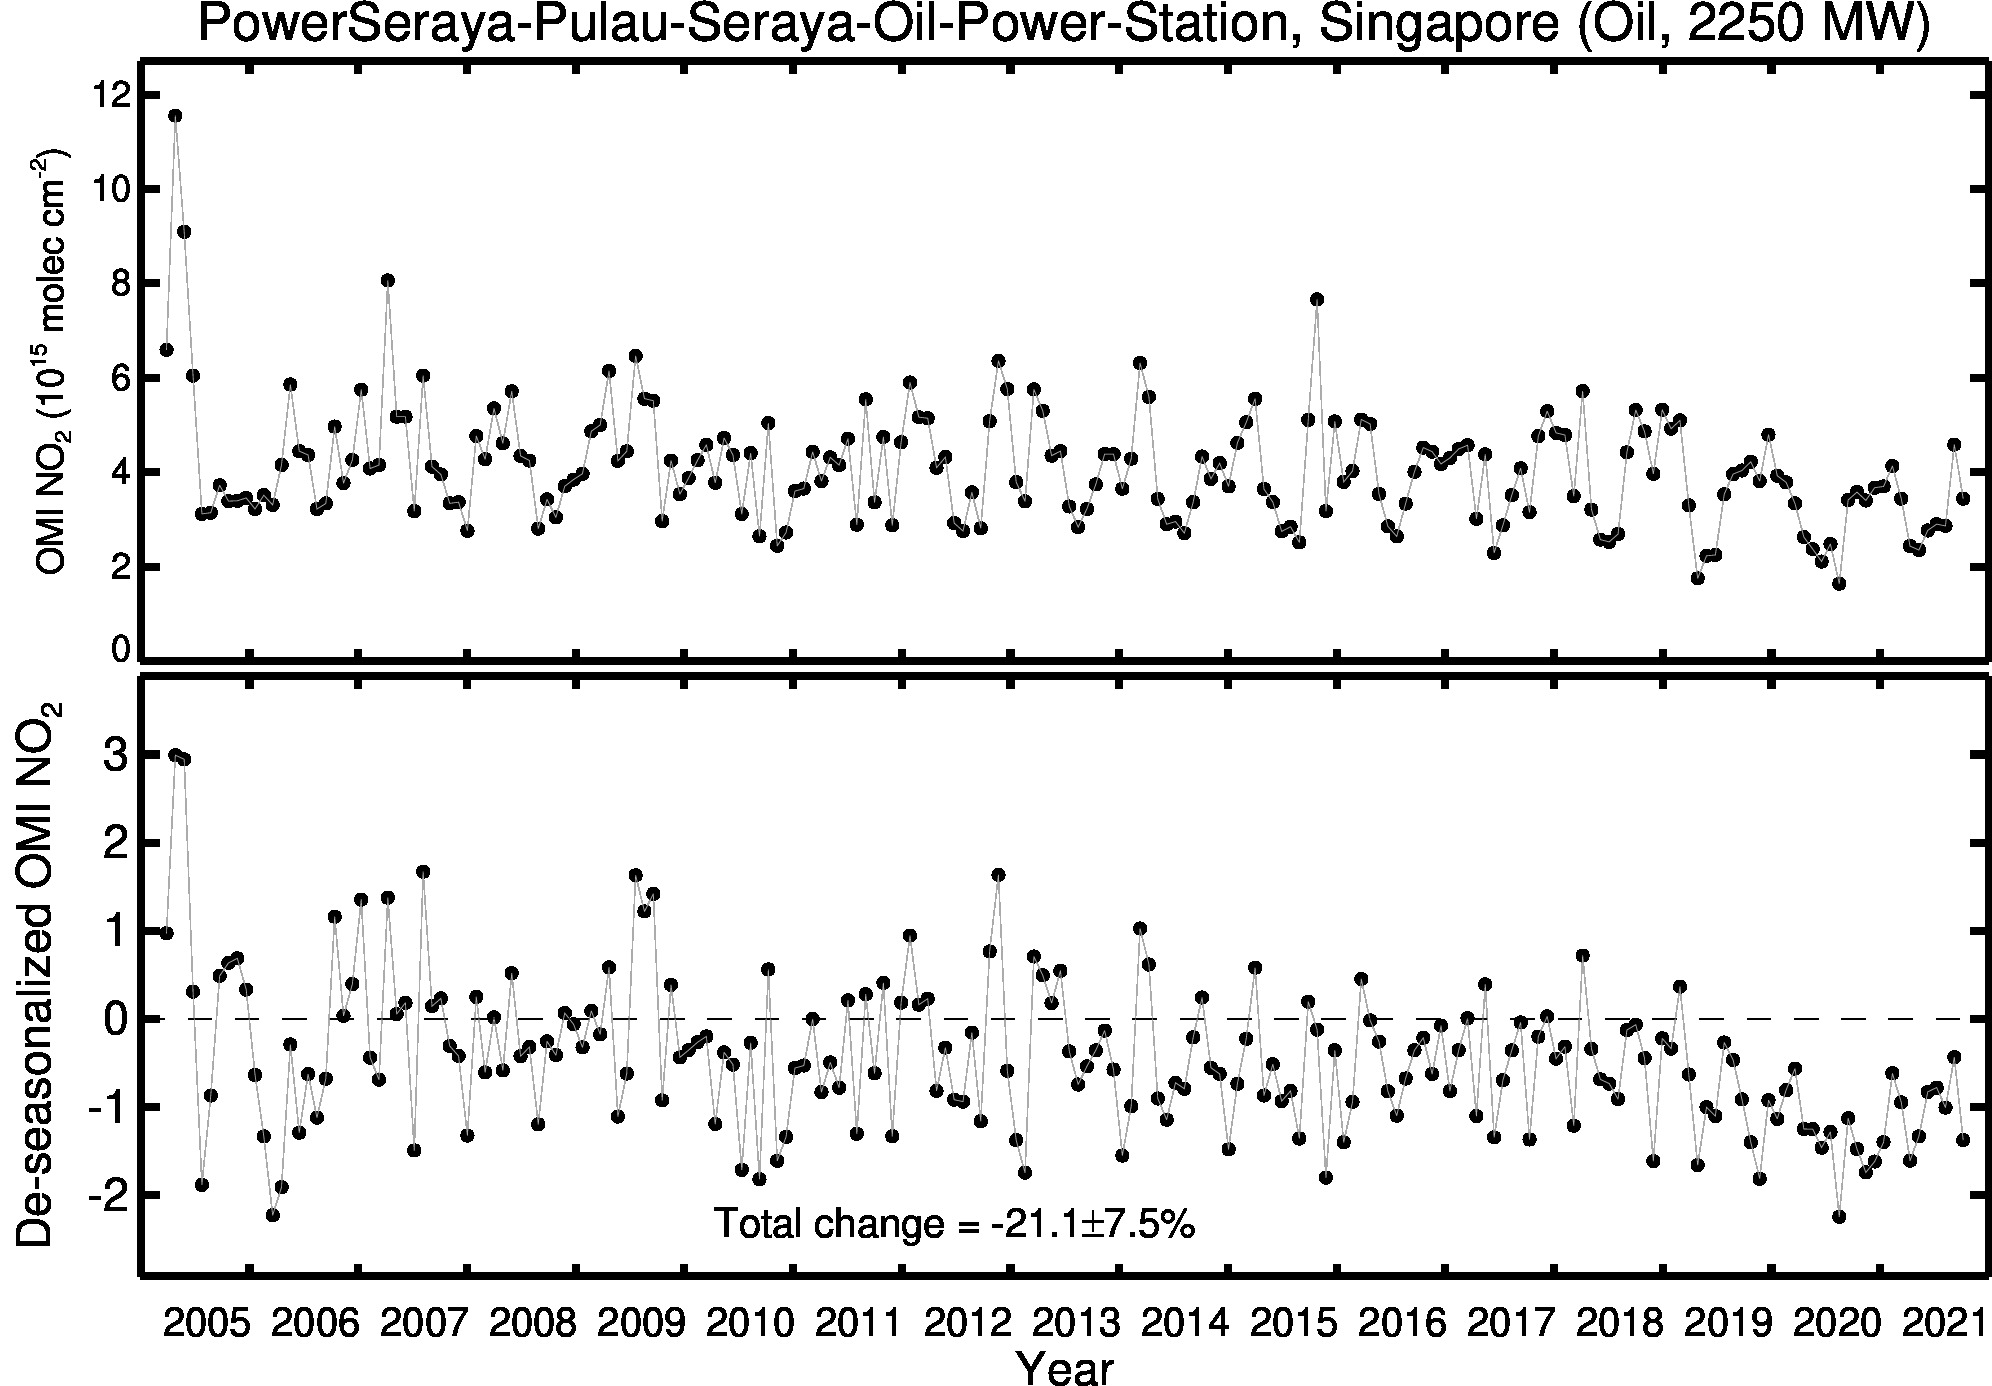 PowerSeraya Pulau Seraya Oil Power Station Line Plot 2005-2021